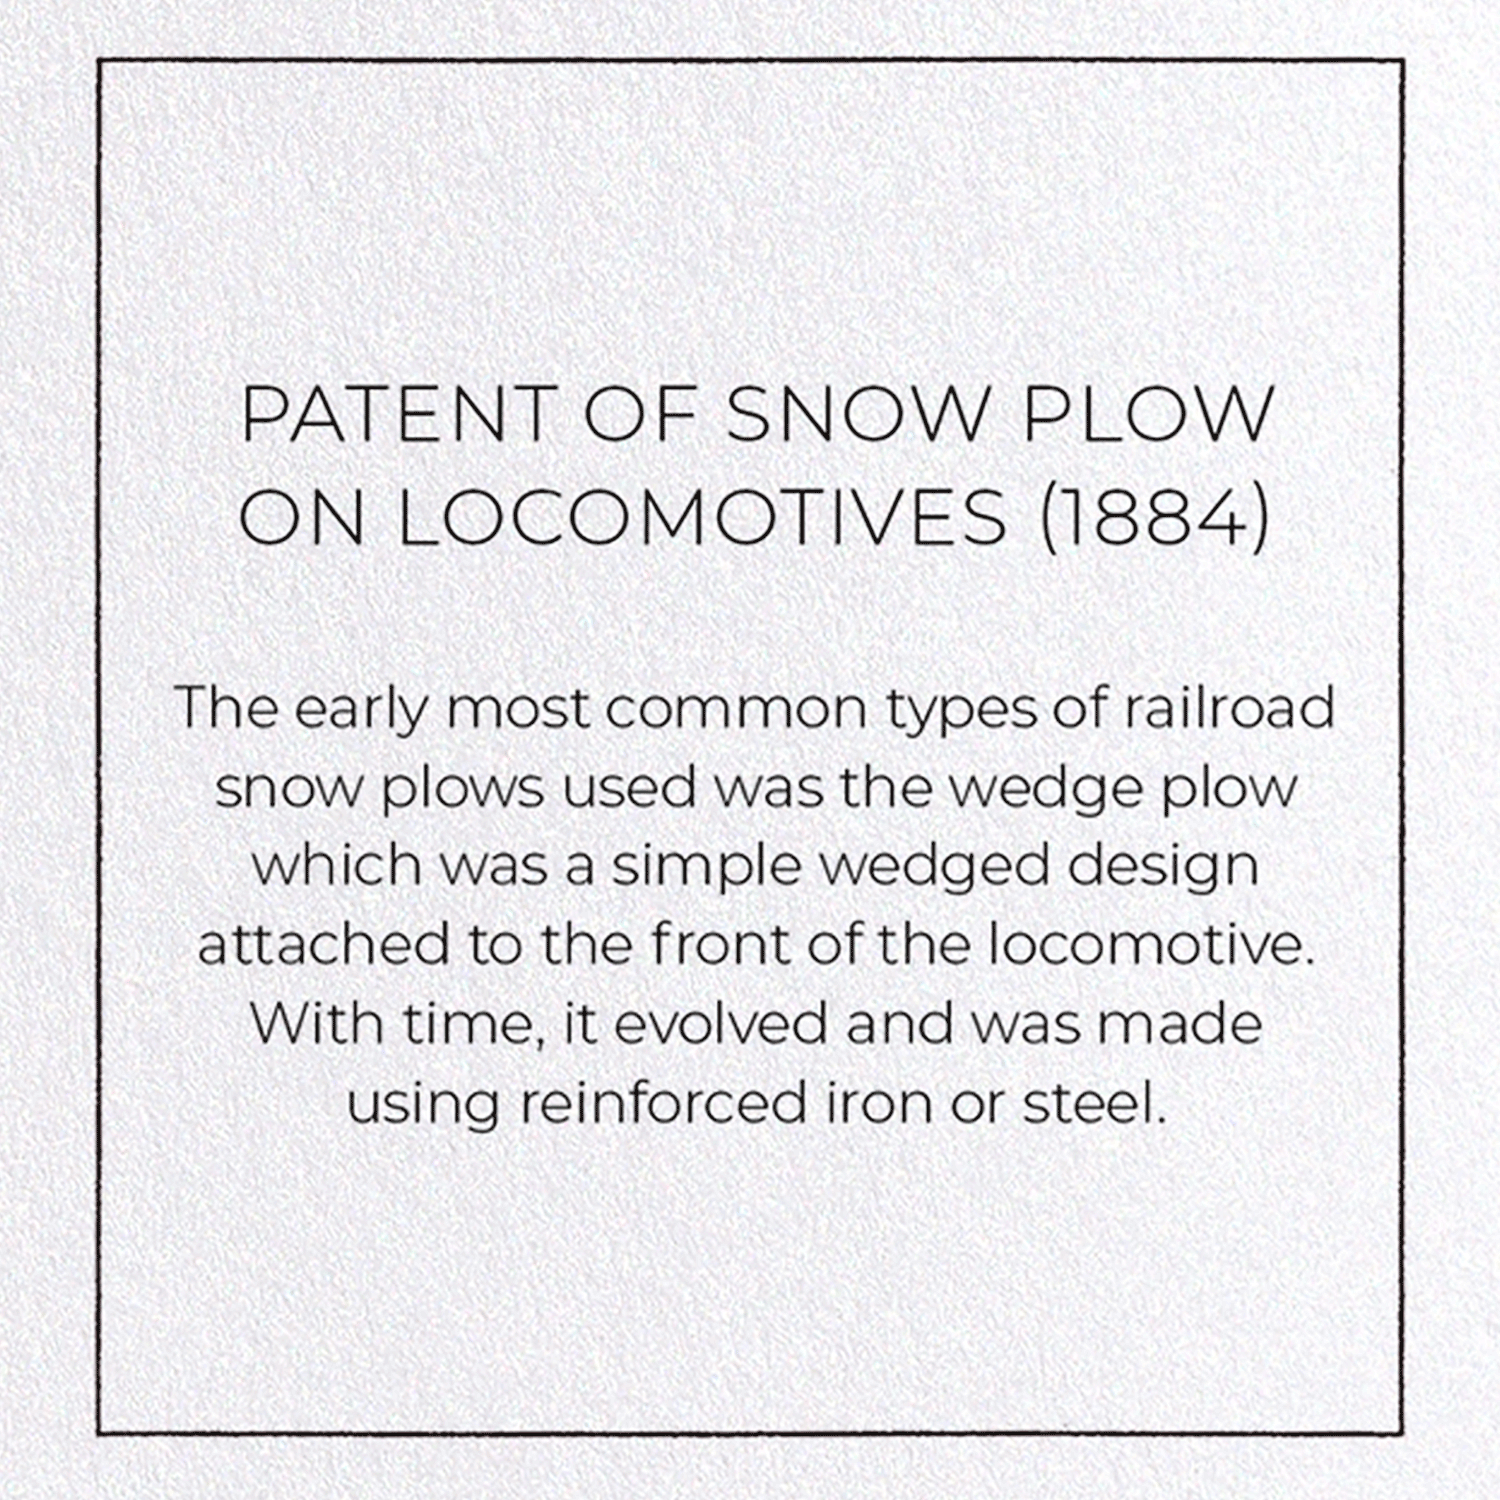 PATENT OF SNOW PLOW ON LOCOMOTIVES (1884)